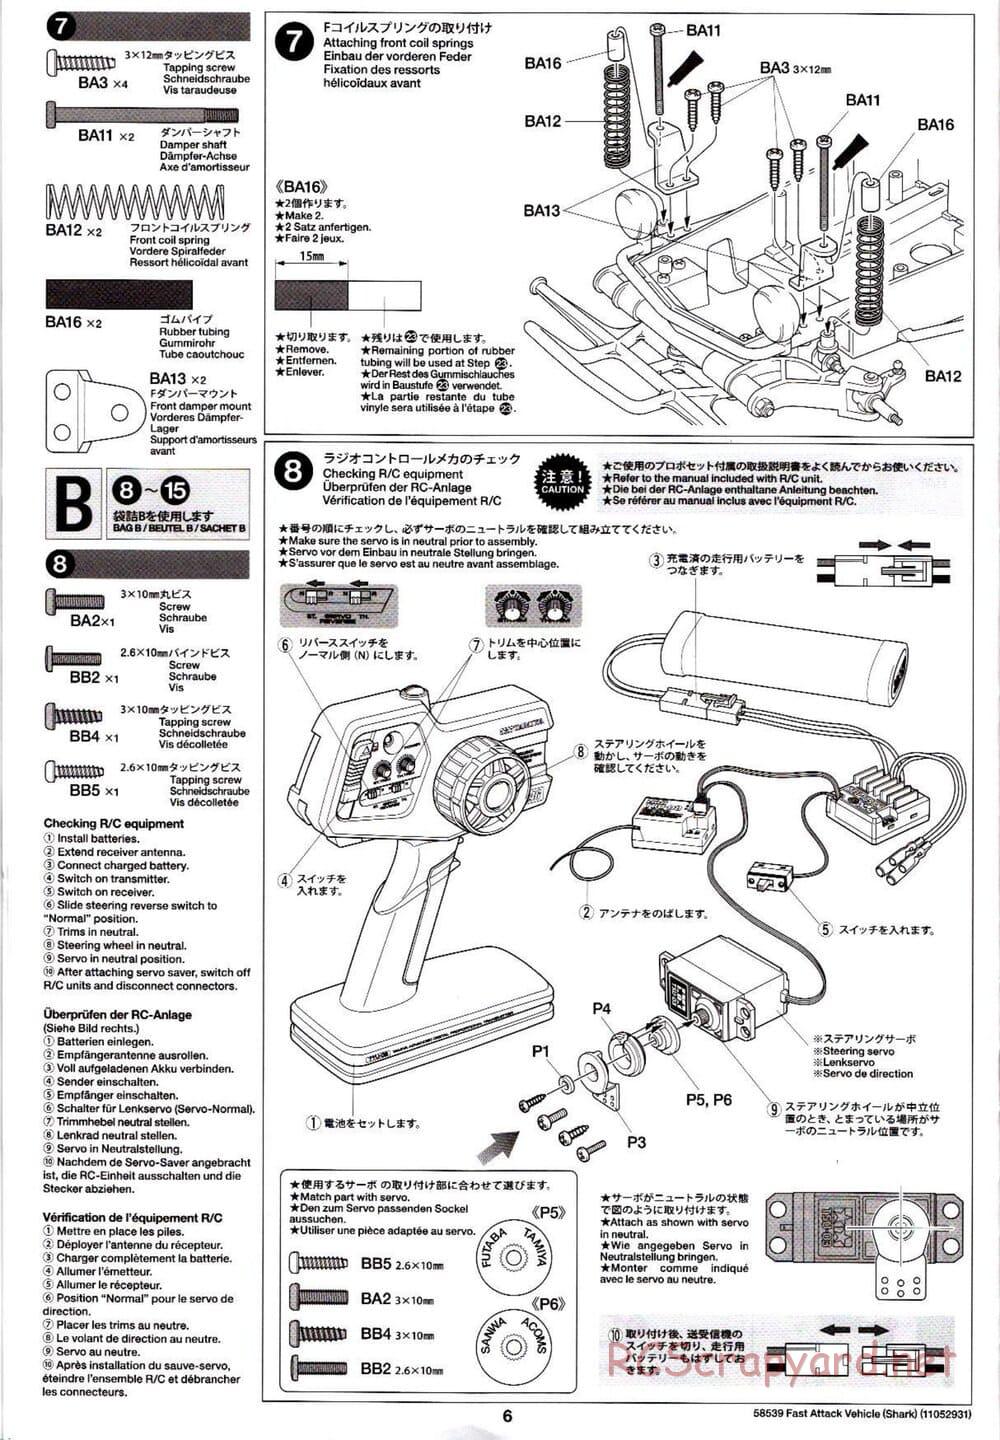 Tamiya - Fast Attack Vehicle w/ Shark Mouth - FAV Chassis - Manual - Page 6